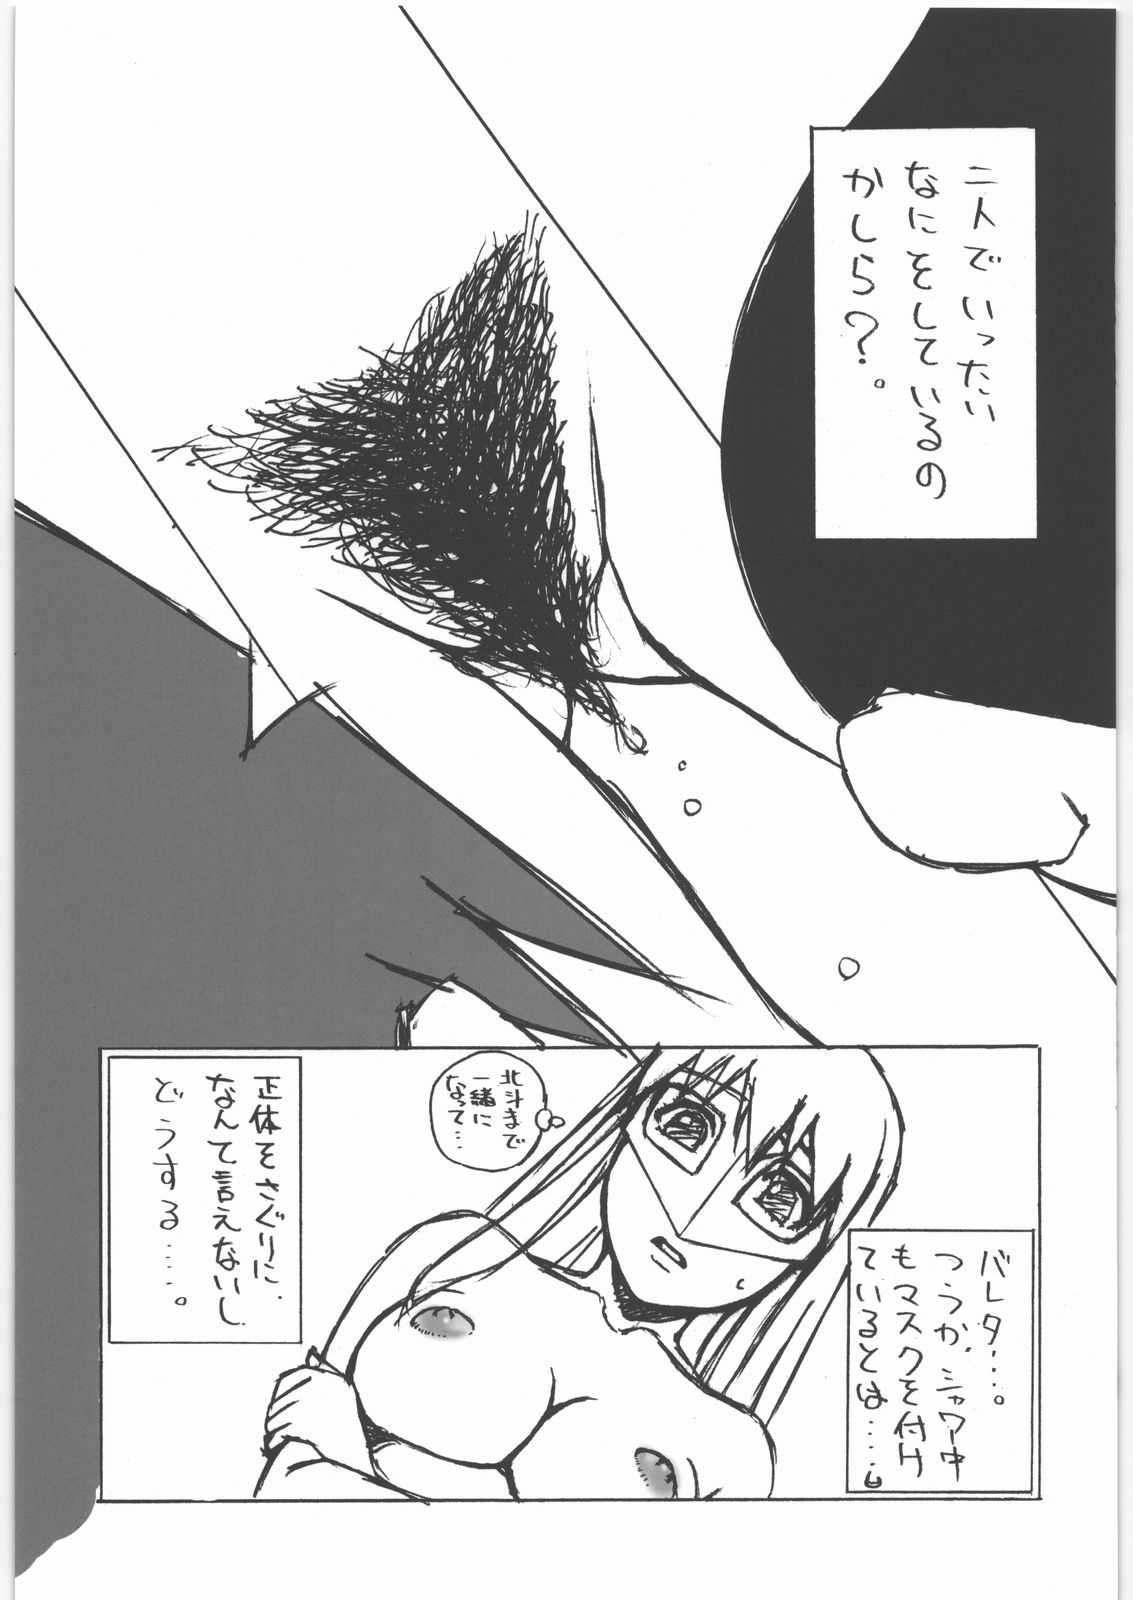 [Daisuki!! Beachkun] Aa... Natsukashi No Heroine Tachi!! 6 (Various) [大好き！！ビーチクン] ああっ&hellip;なつかしのヒロイン達！！ 6 (よろず)